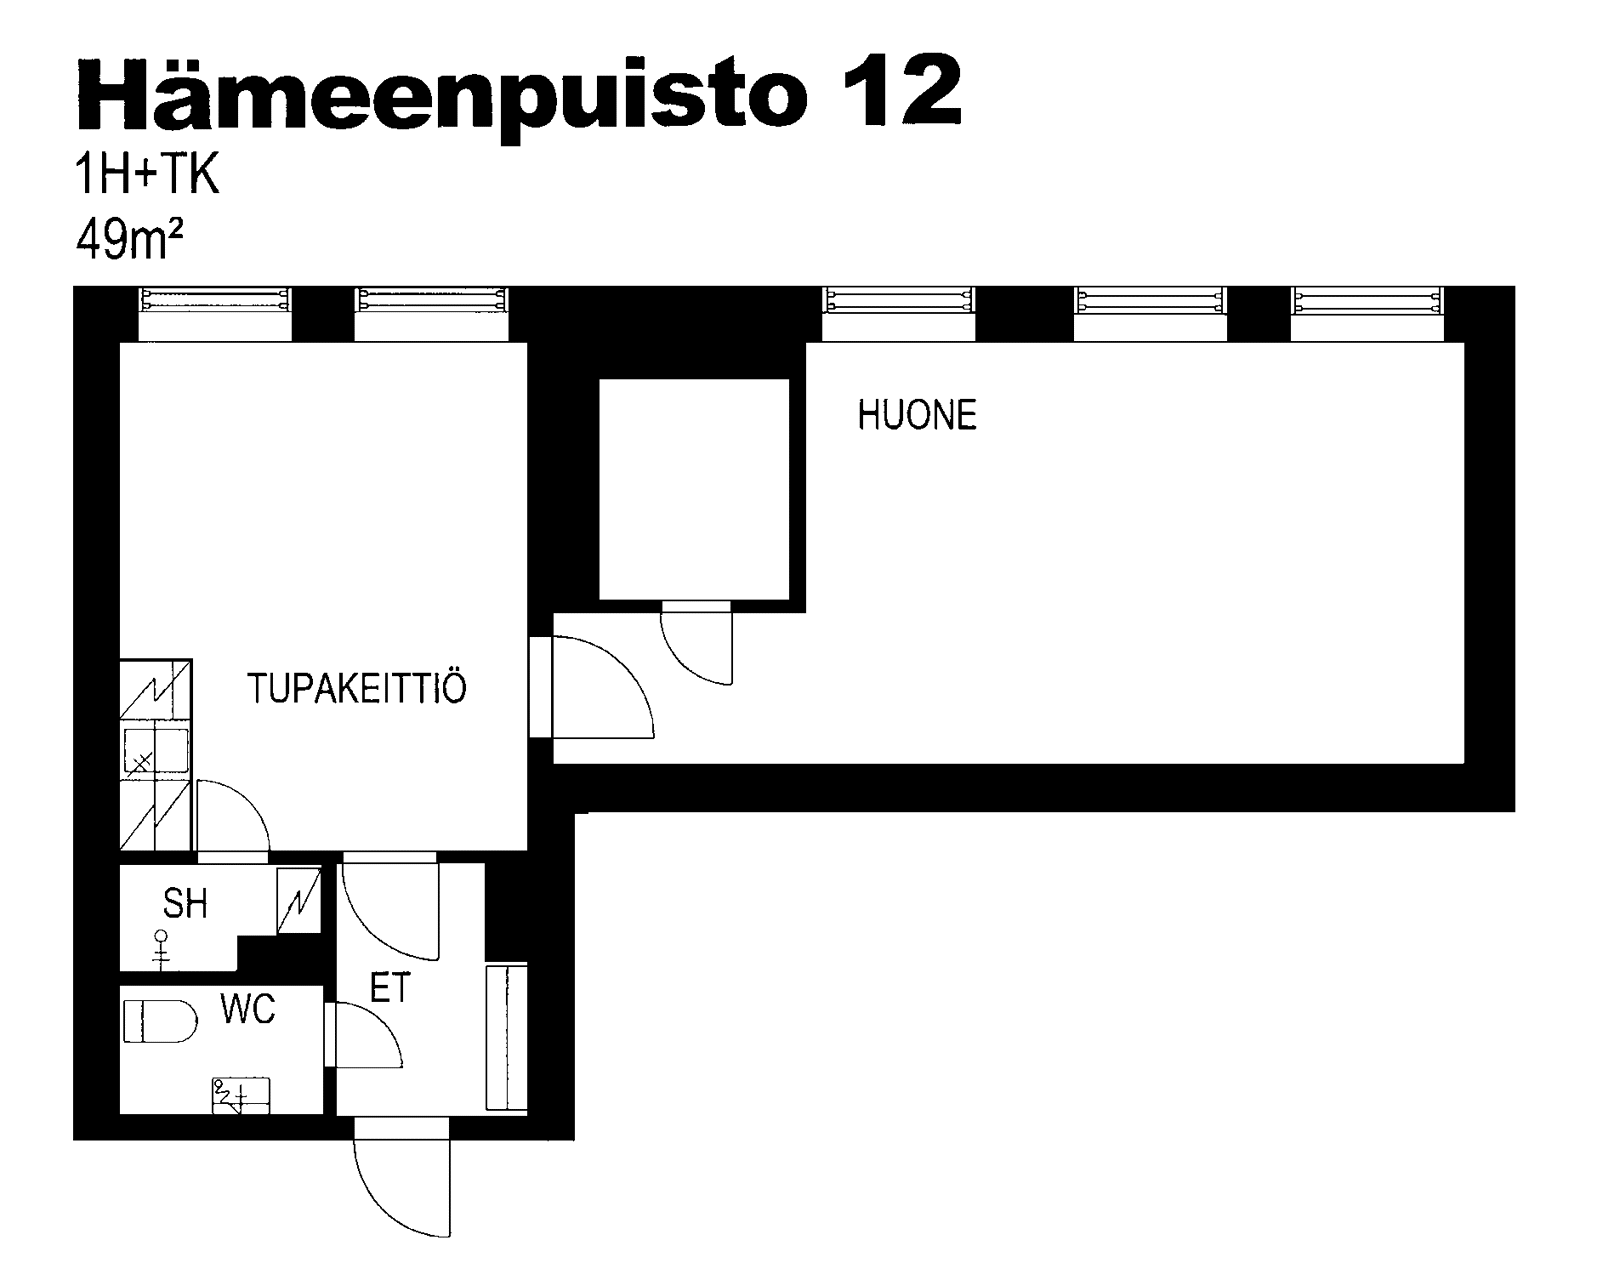 Rental apartments Hämeenpuisto 12, Tampere | Lumo – Rent easily online